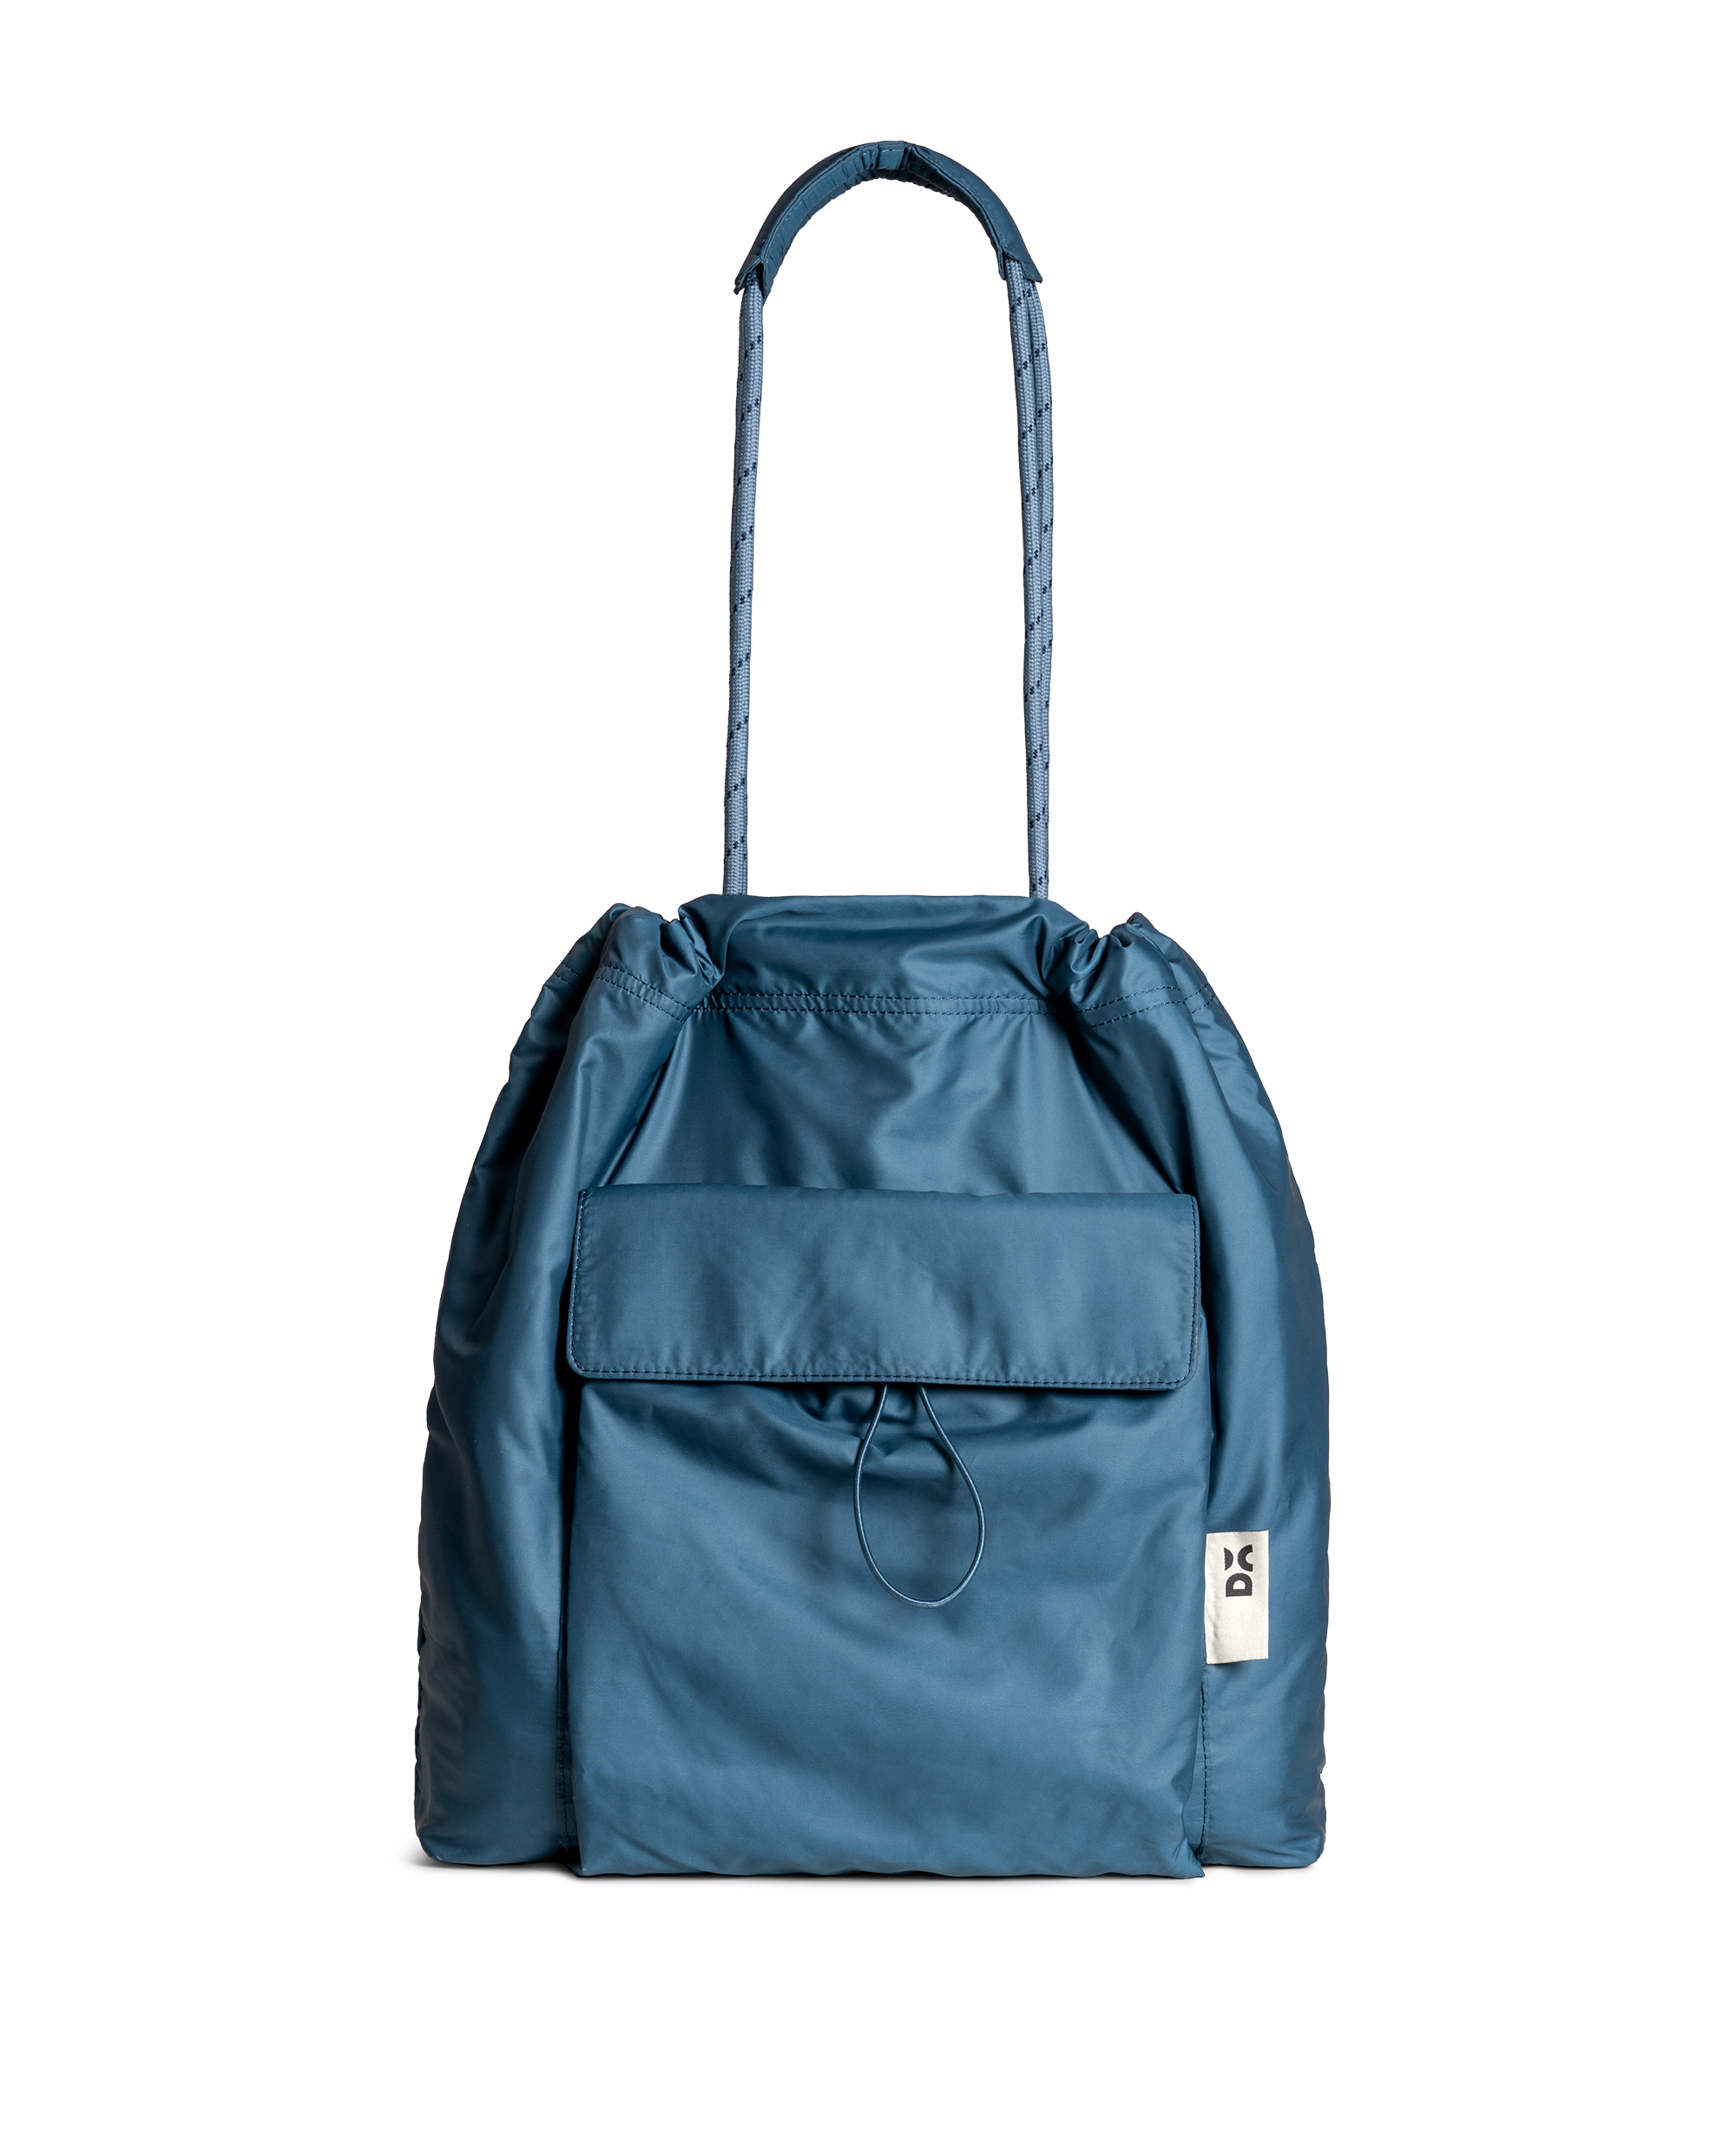 Le Pliage Original M Travel bag Navy - Recycled canvas | Longchamp US